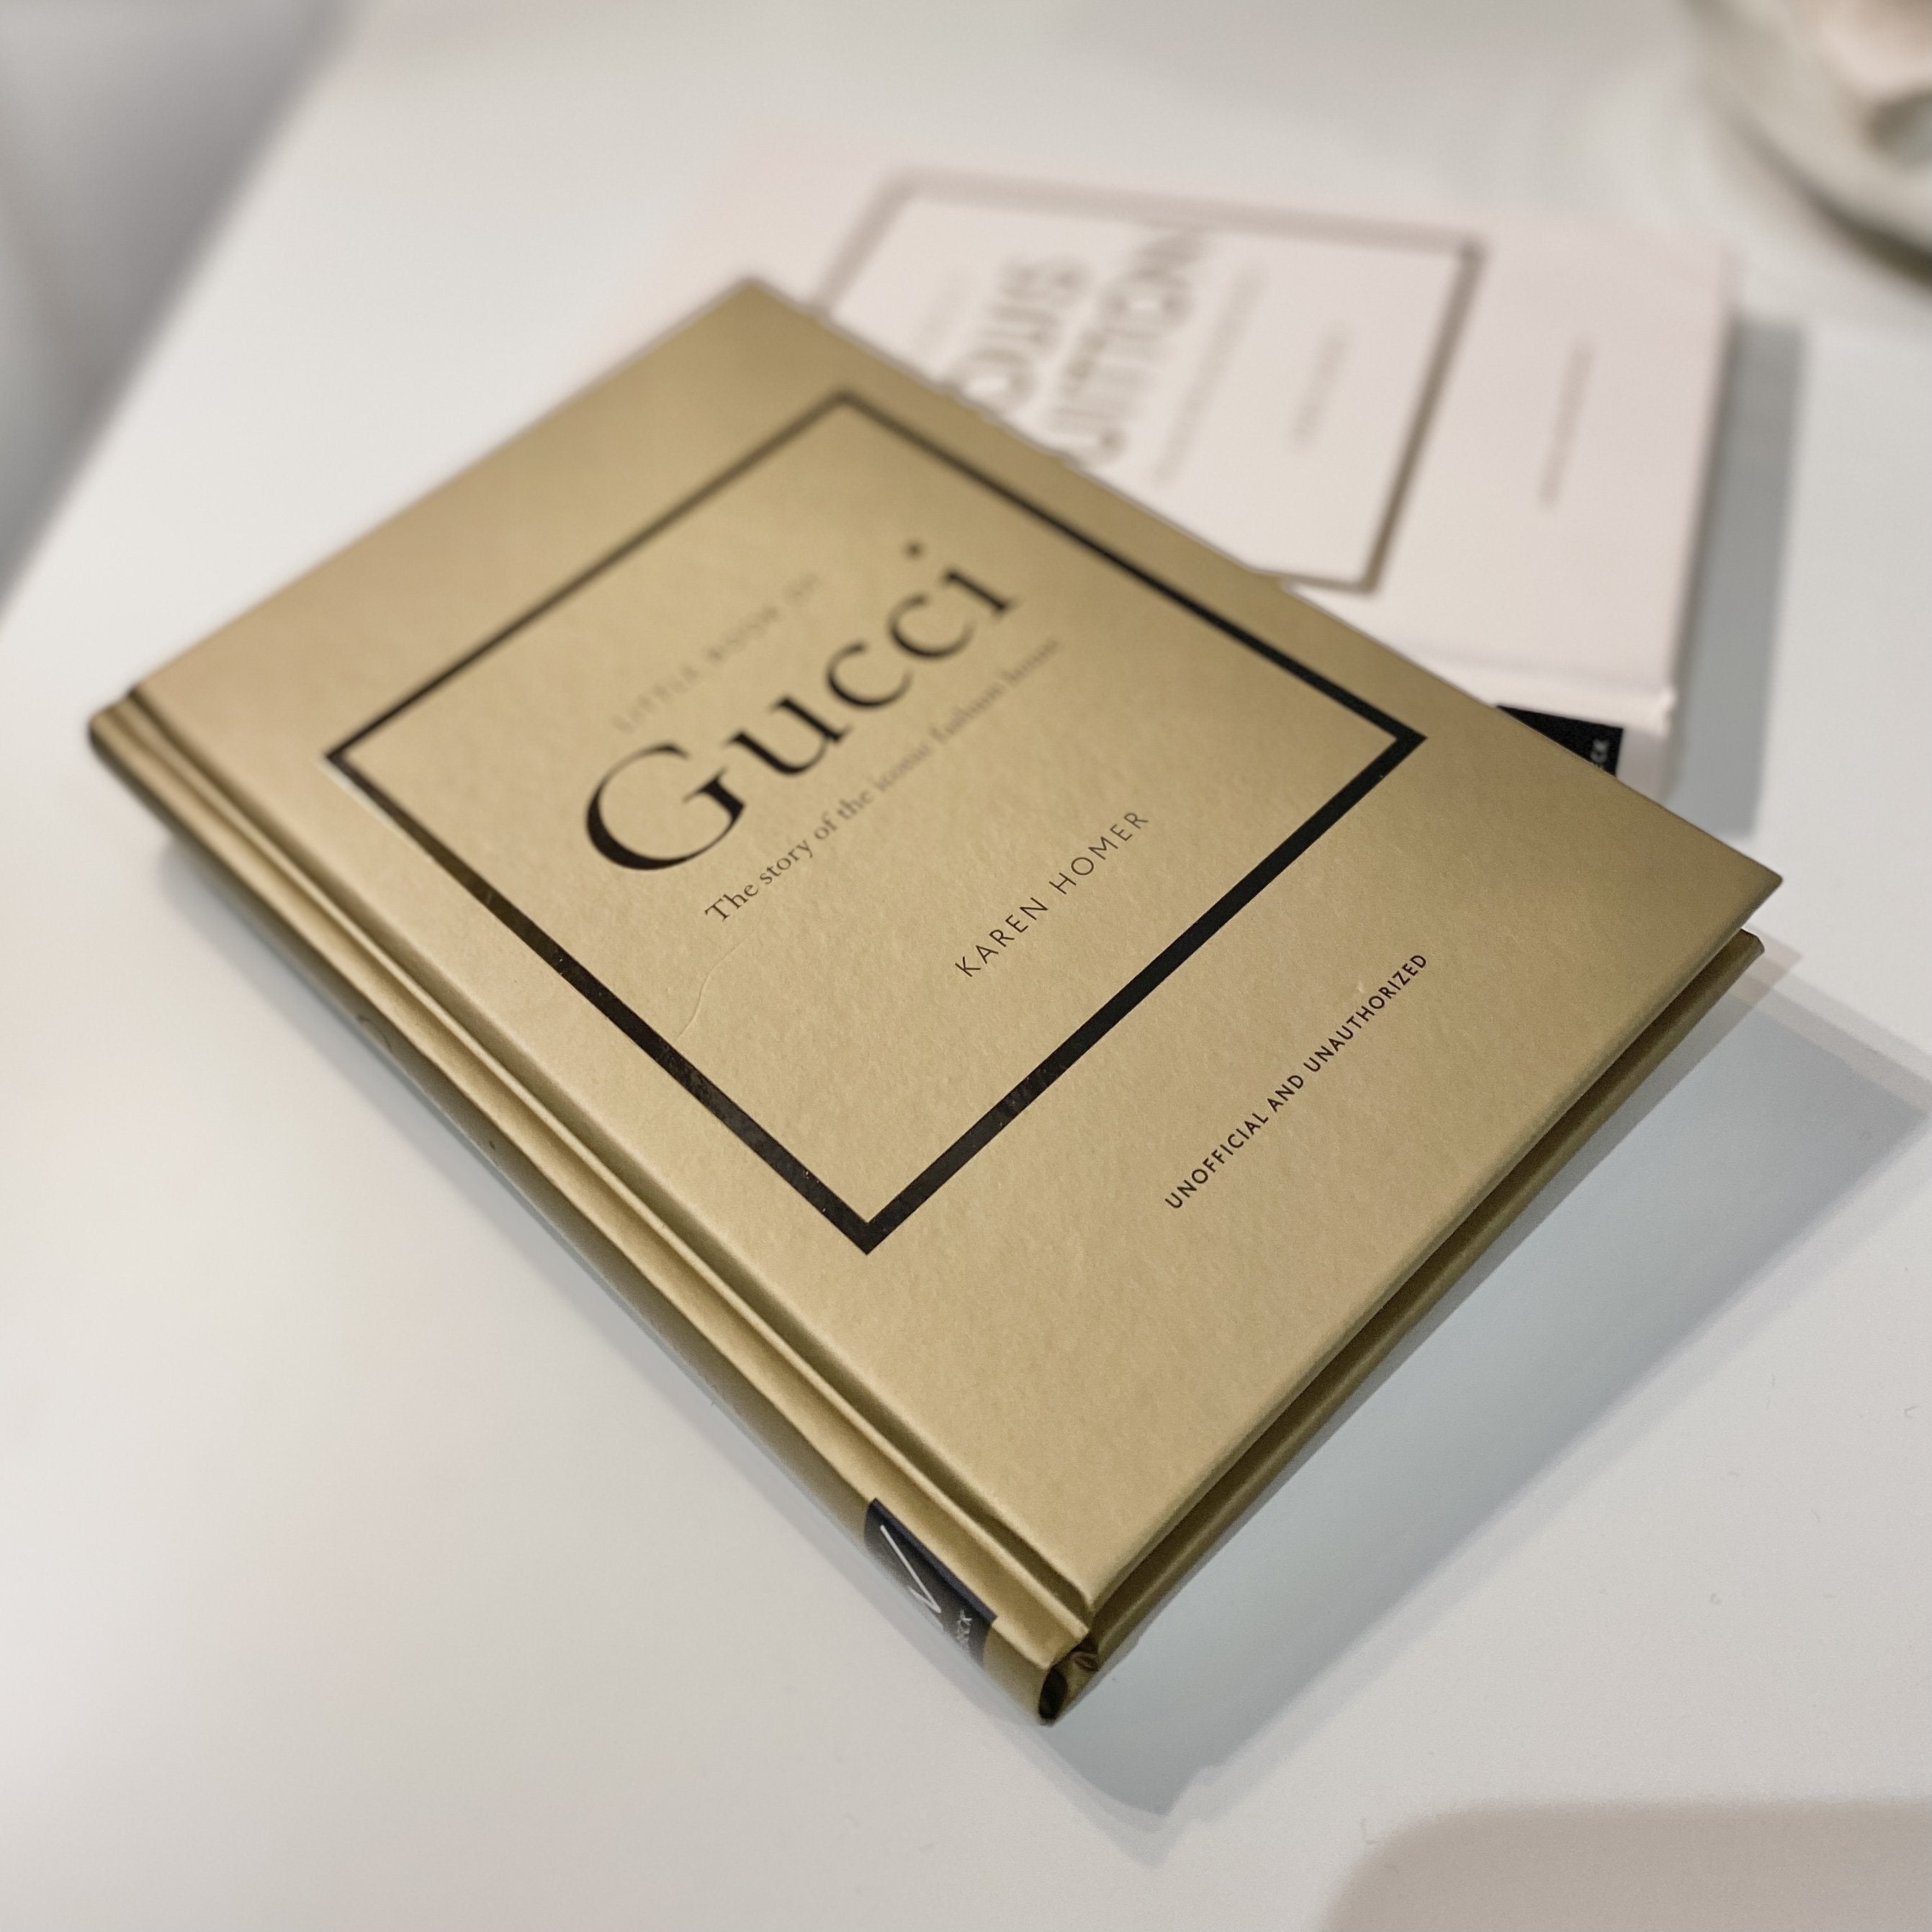 Designer Book Décor - Gucci - Wyld Blue